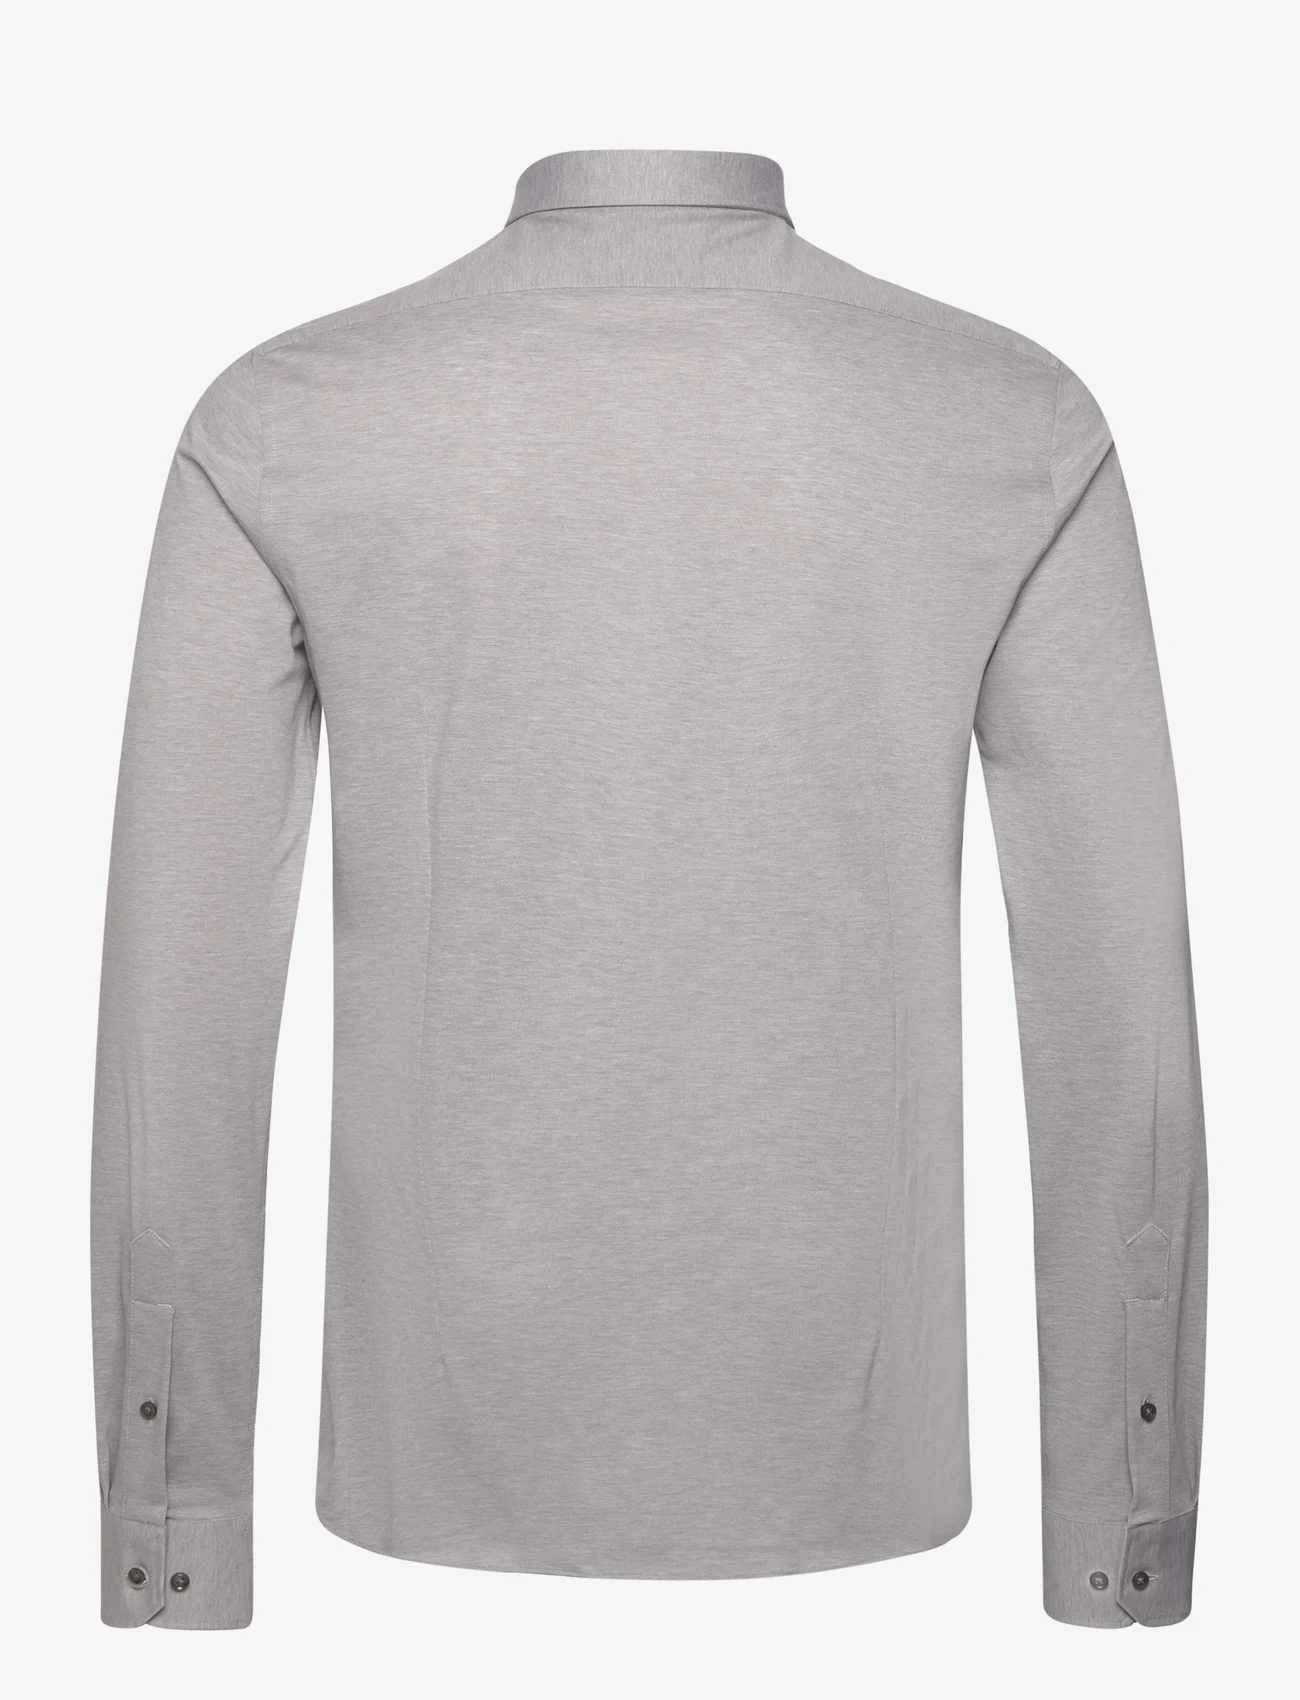 Michael Kors - SOLID PIQUE SLIM SHIRT - basic overhemden - light grey - 1